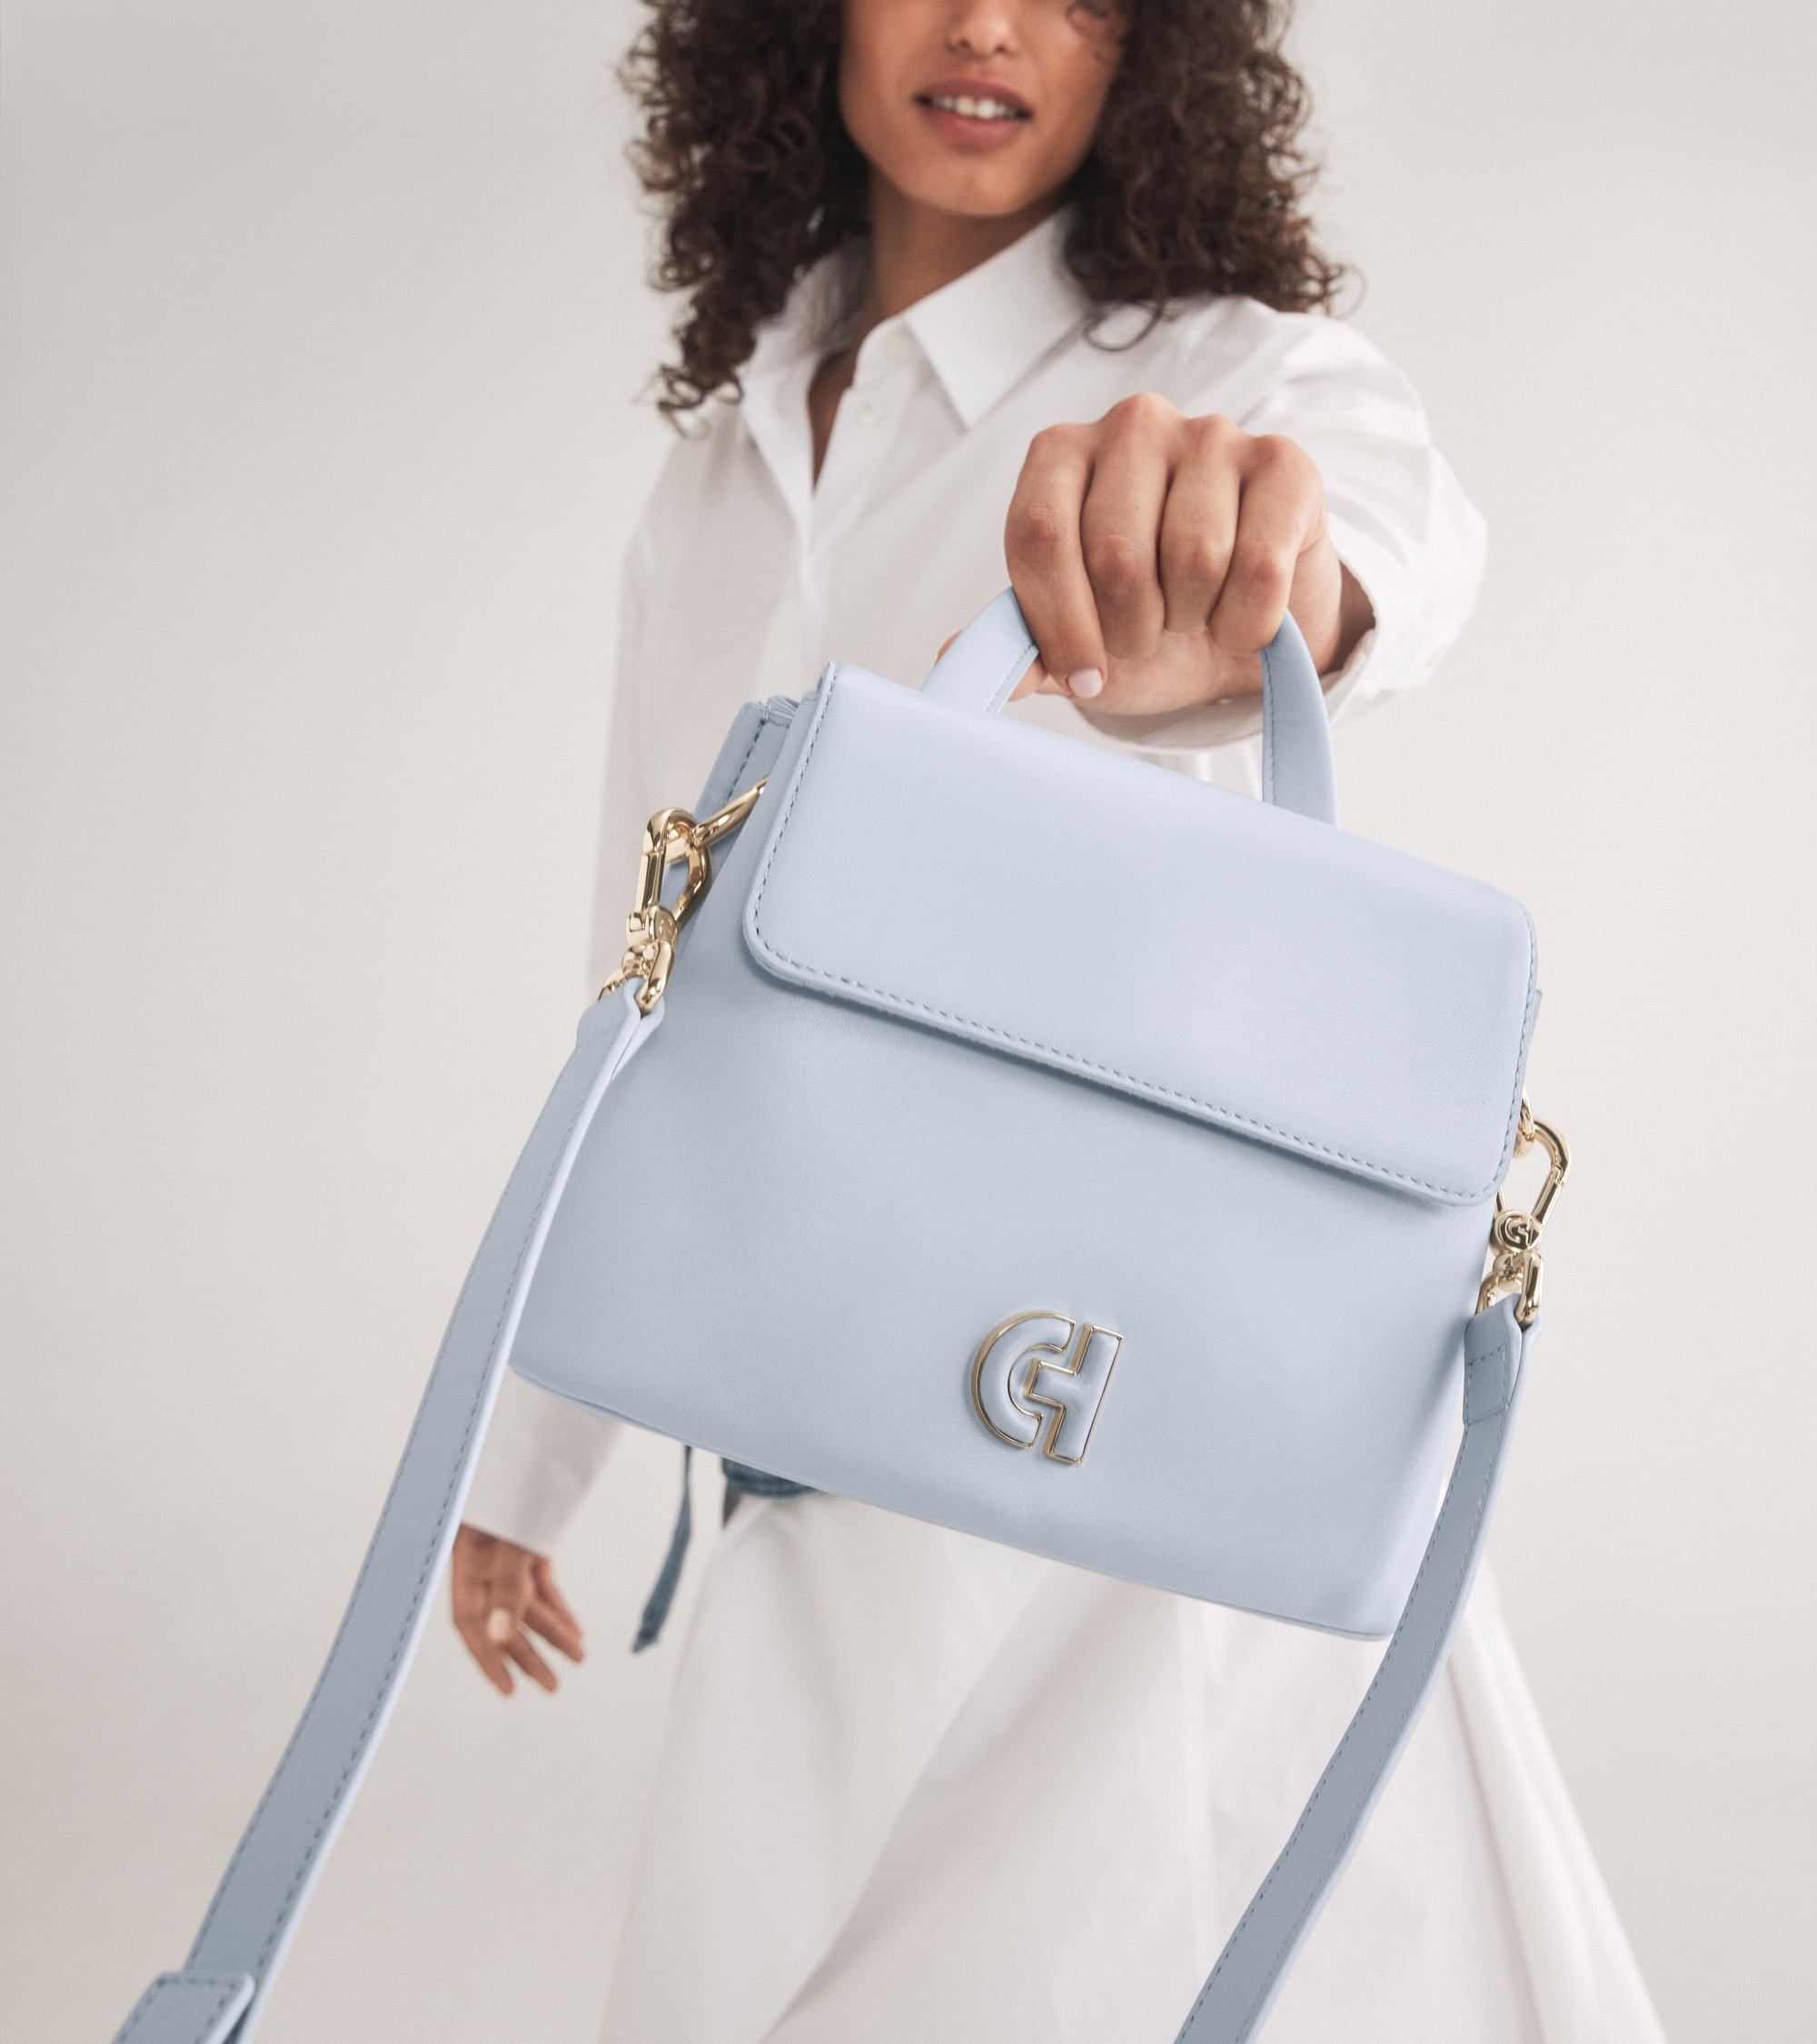 Female model with a handbag